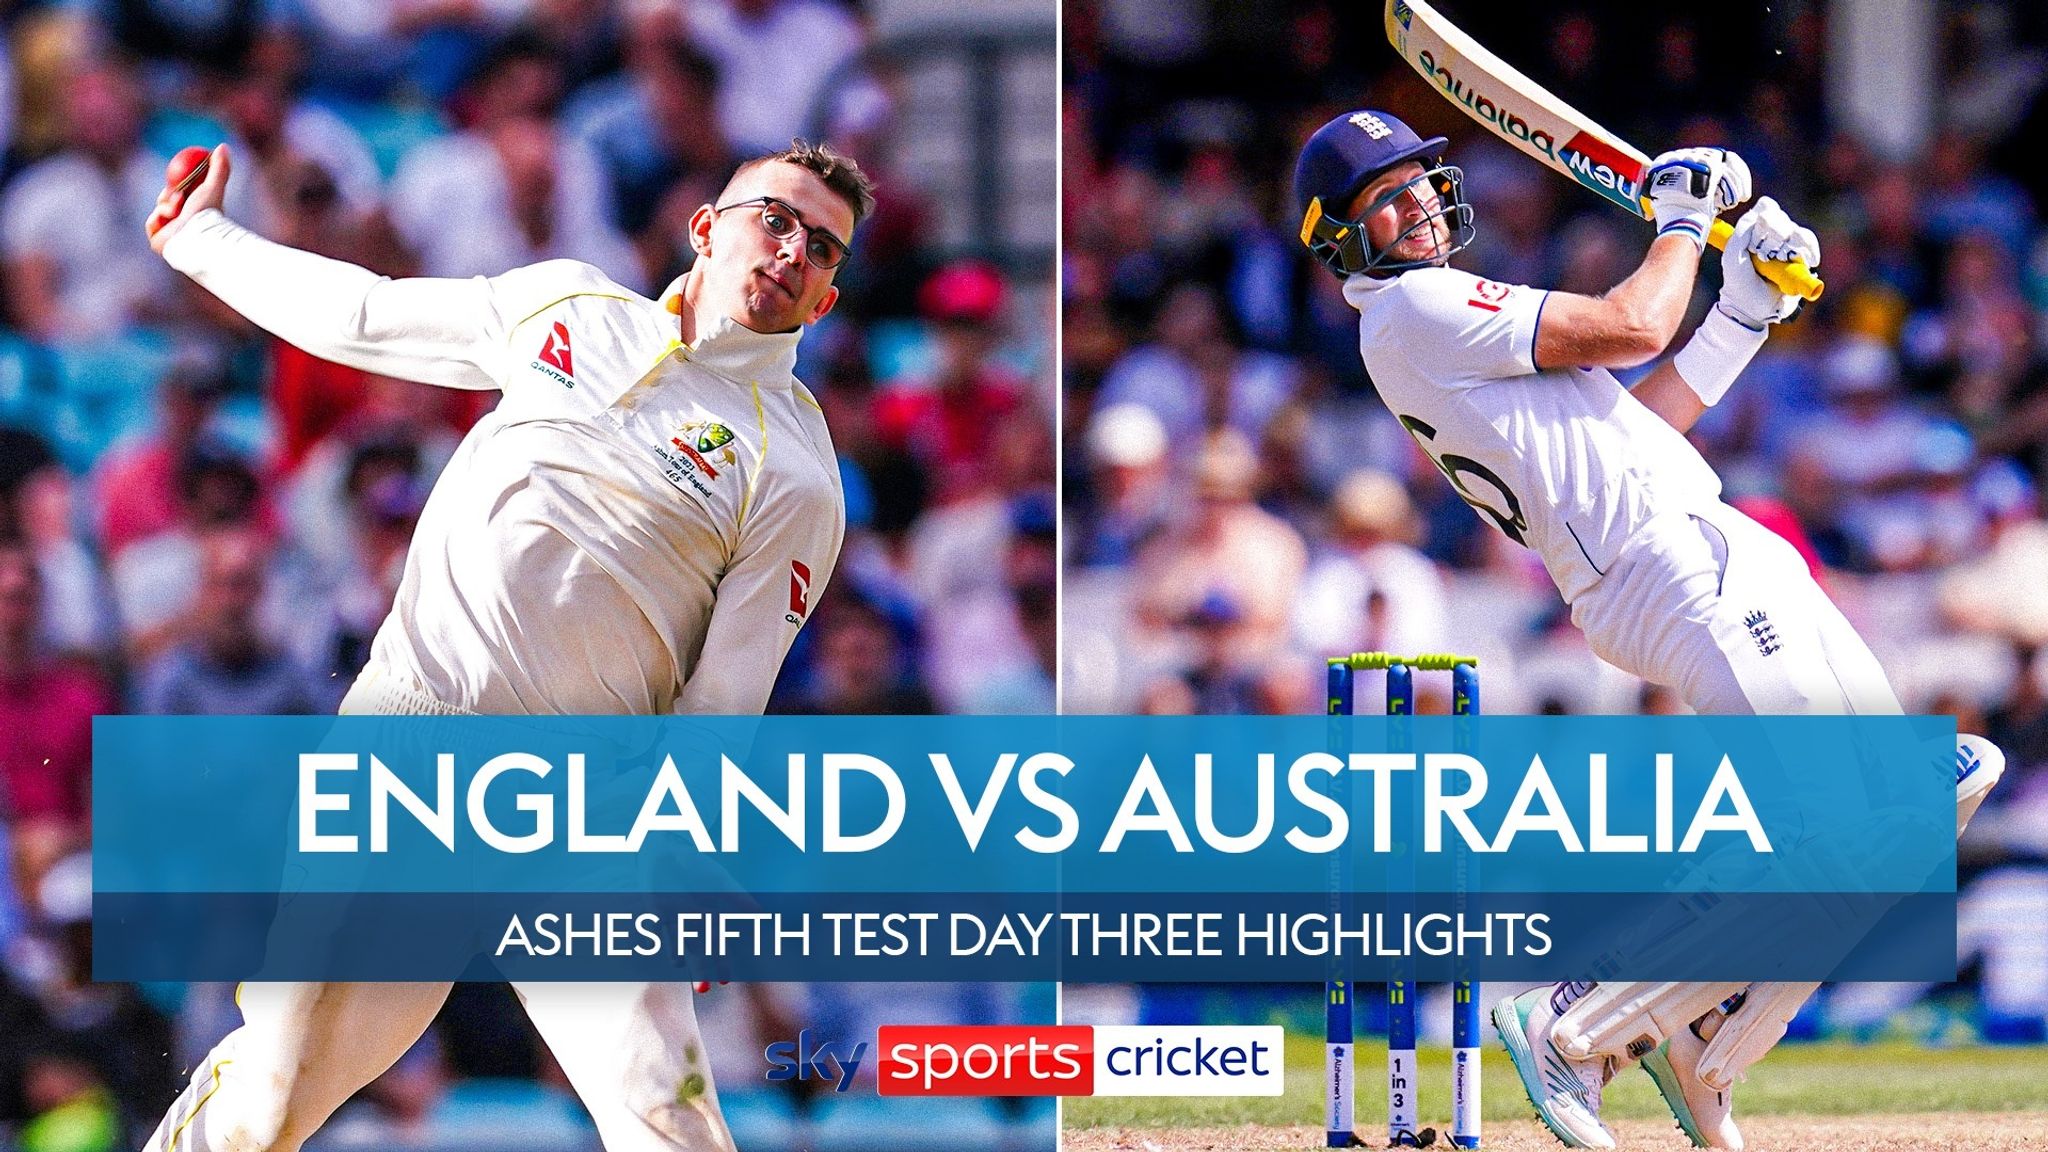 England vs Australia Day three, full highlights Video Watch TV Show Sky Sports